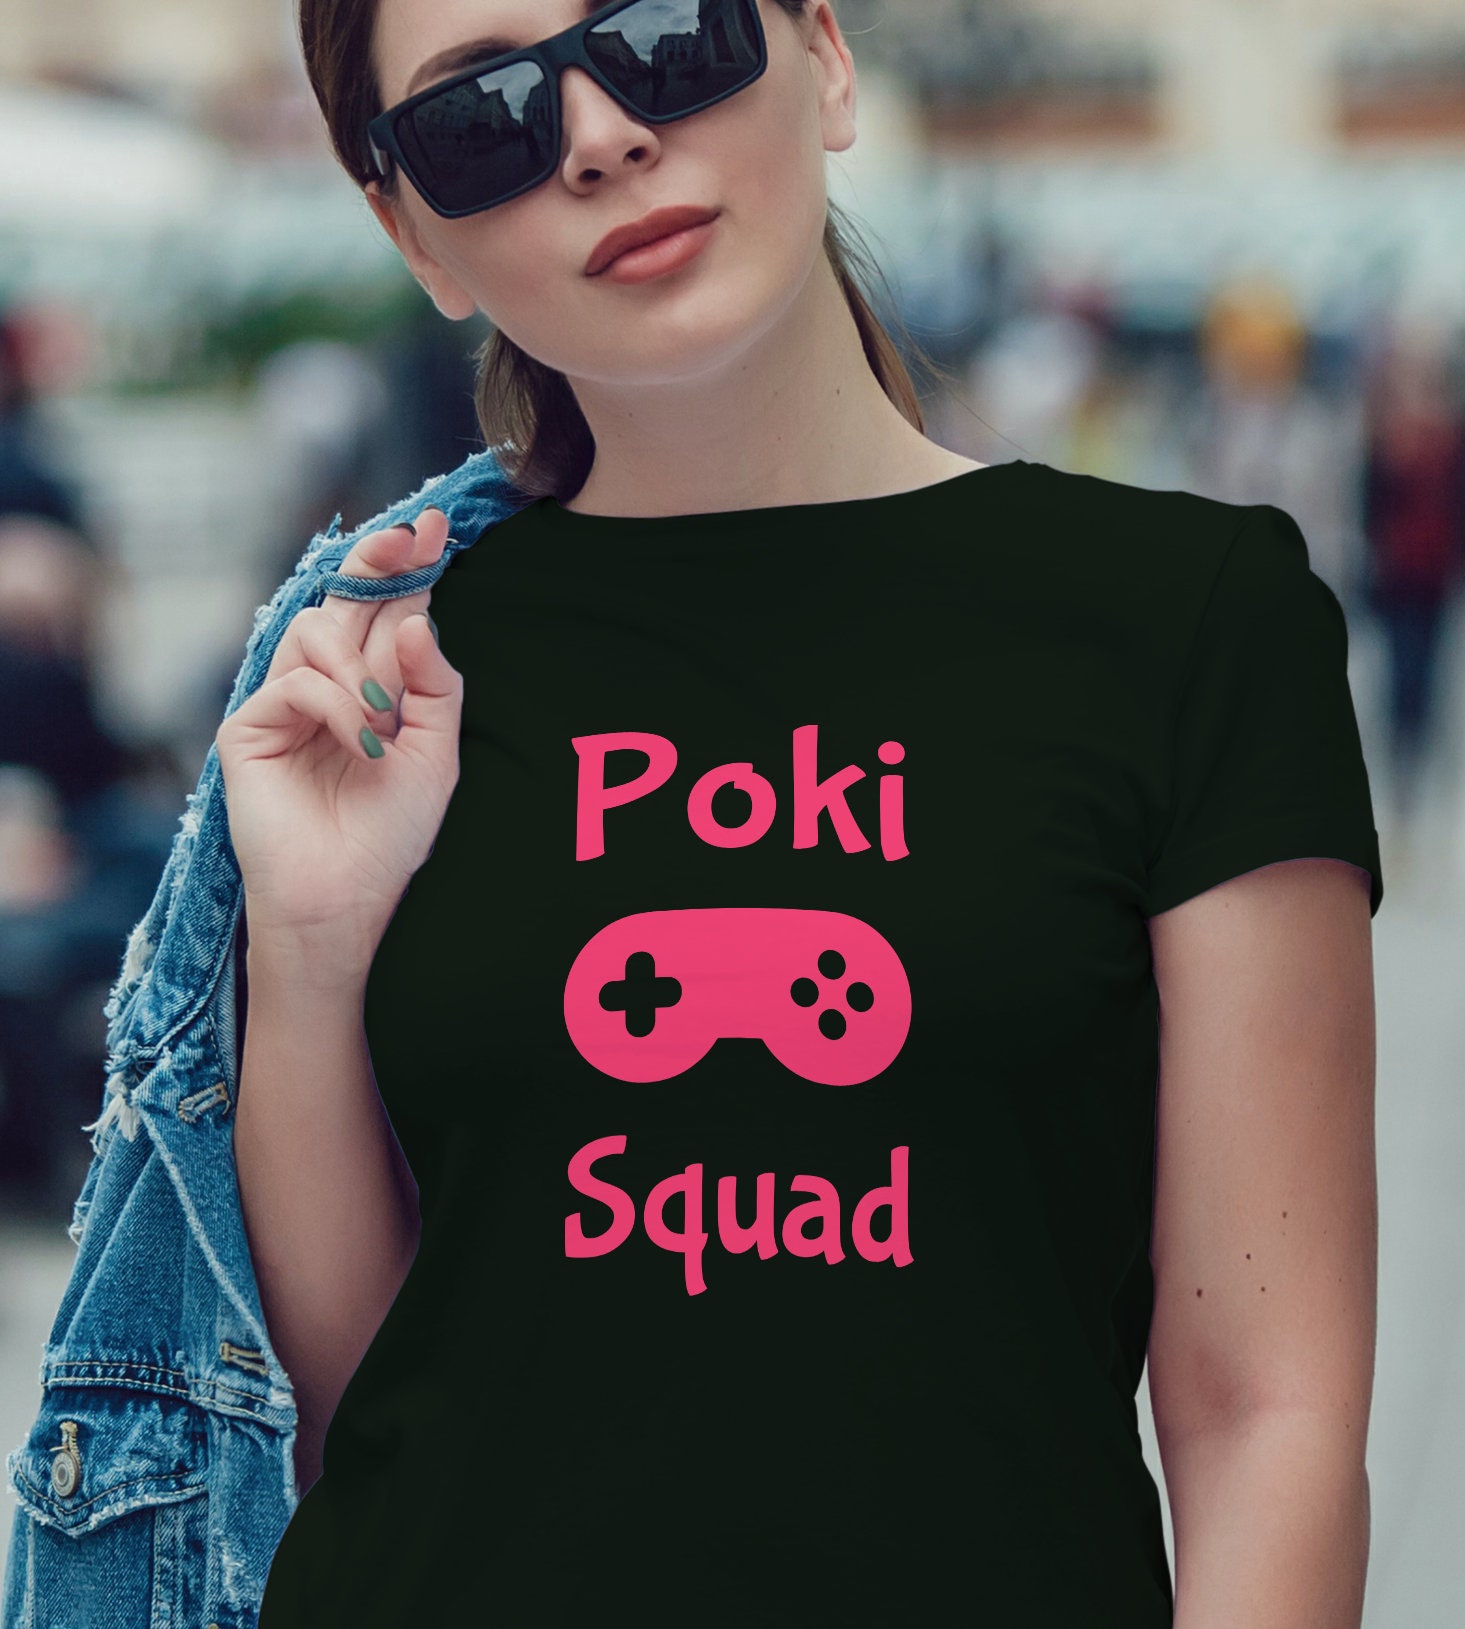 Top good Poki games, hot Poki games